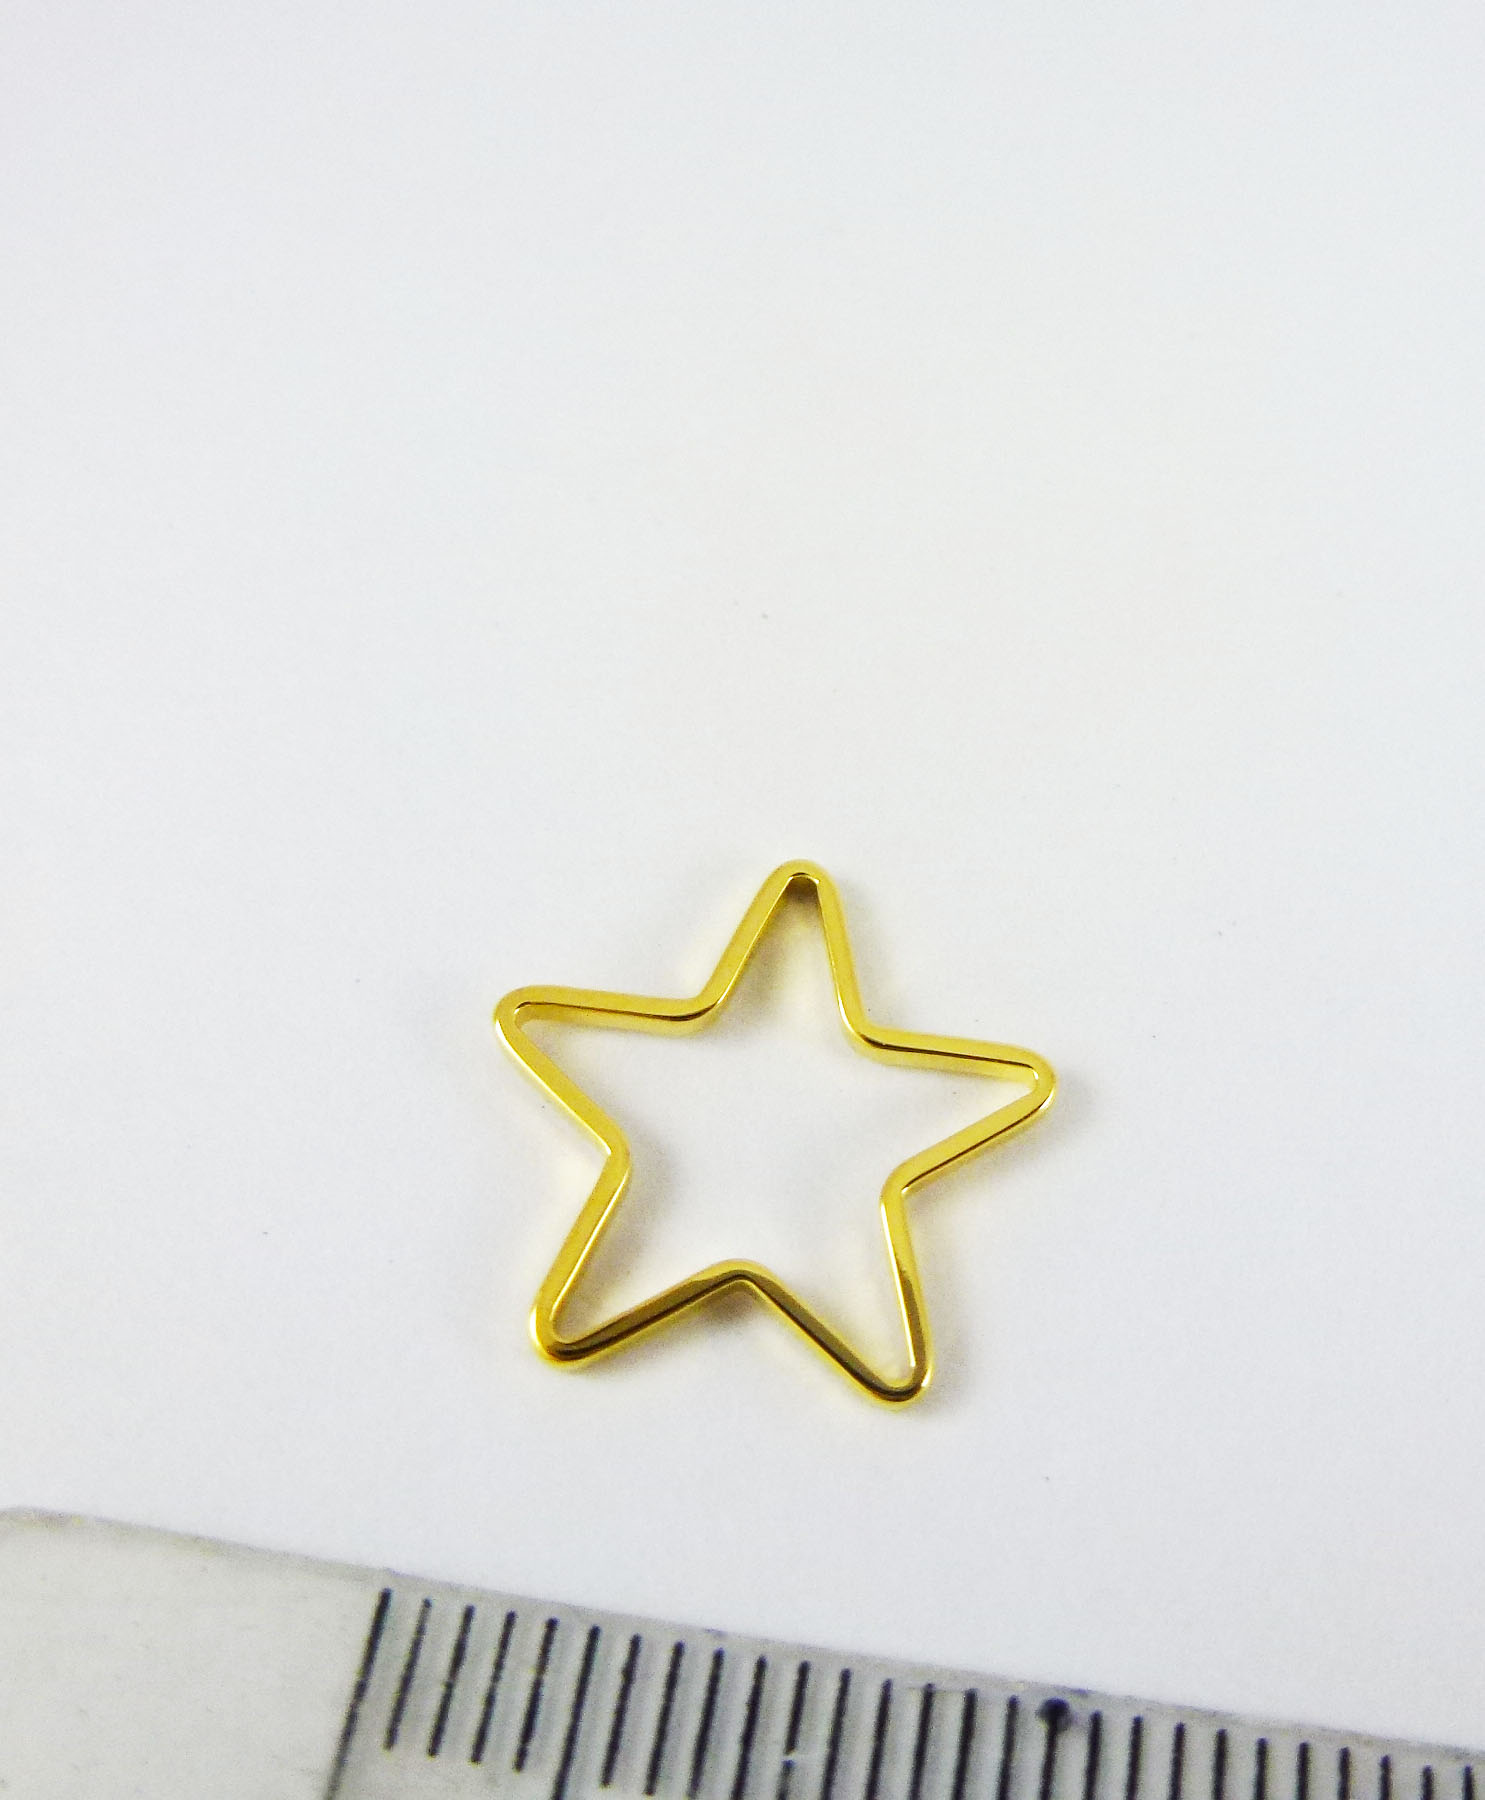 15mm銅鍍金色五角星